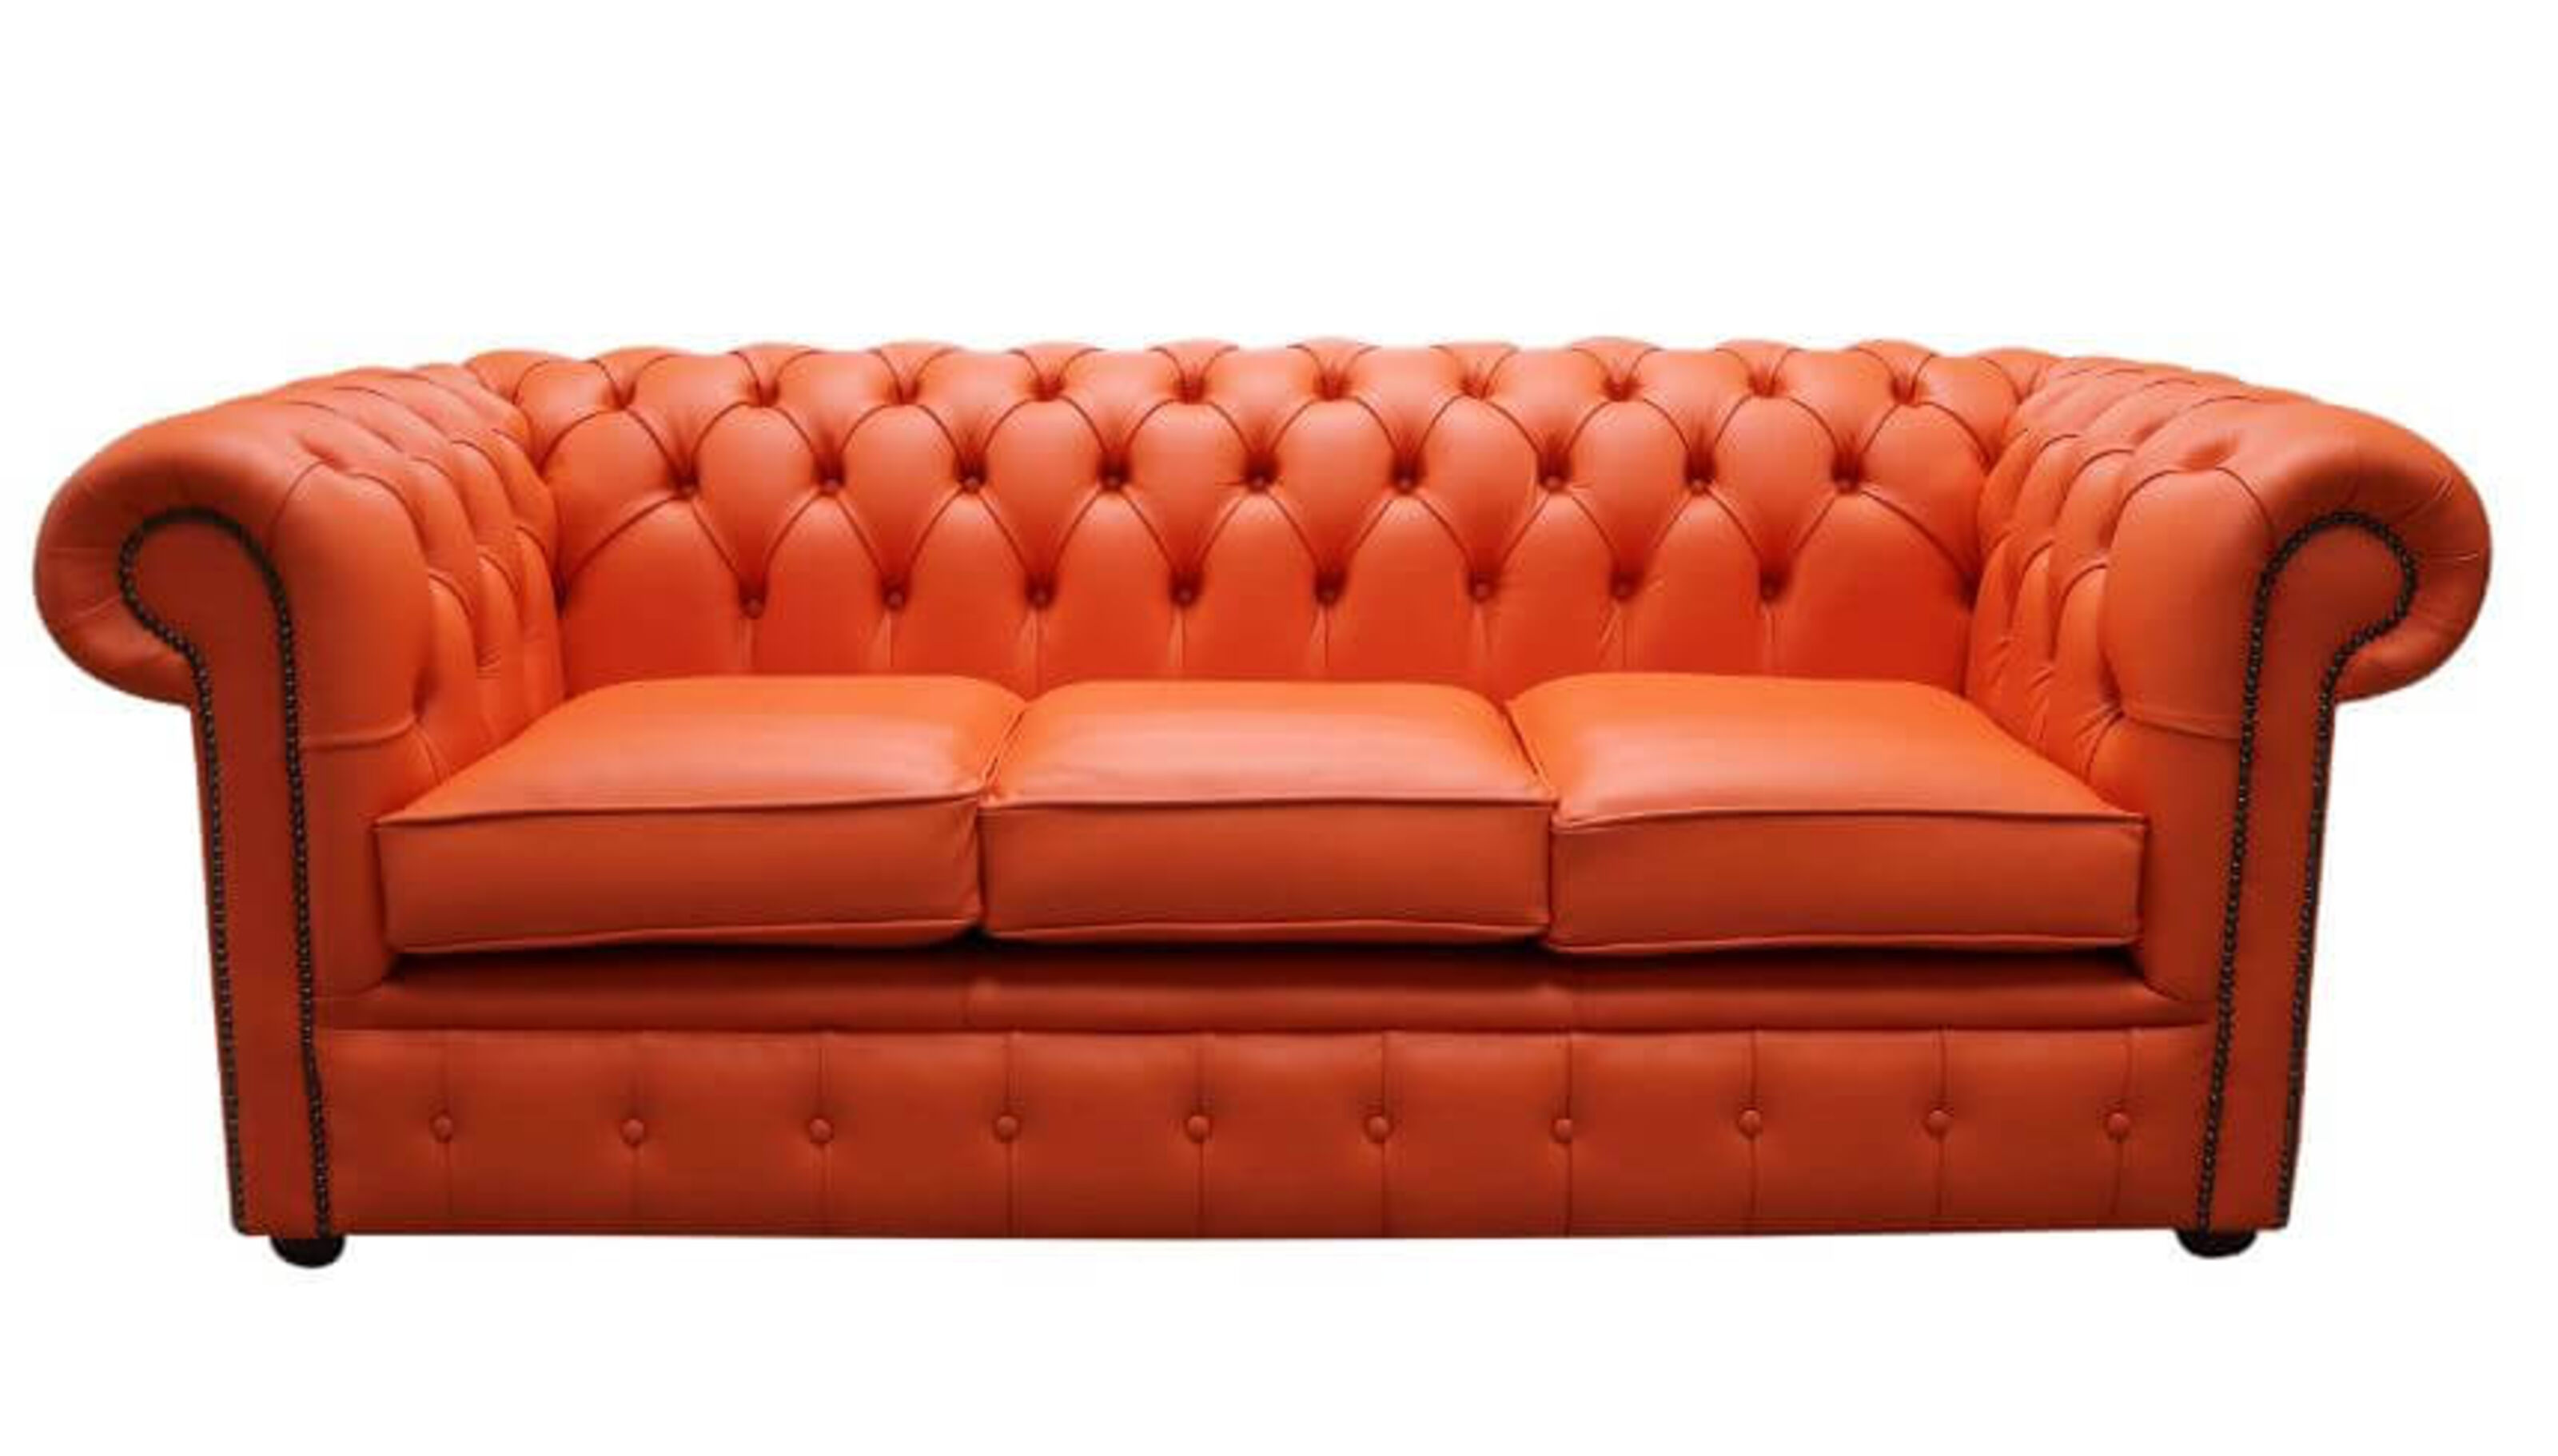 Chesterfield Handmade 3 Seater Sofa, Orange Leather Furniture